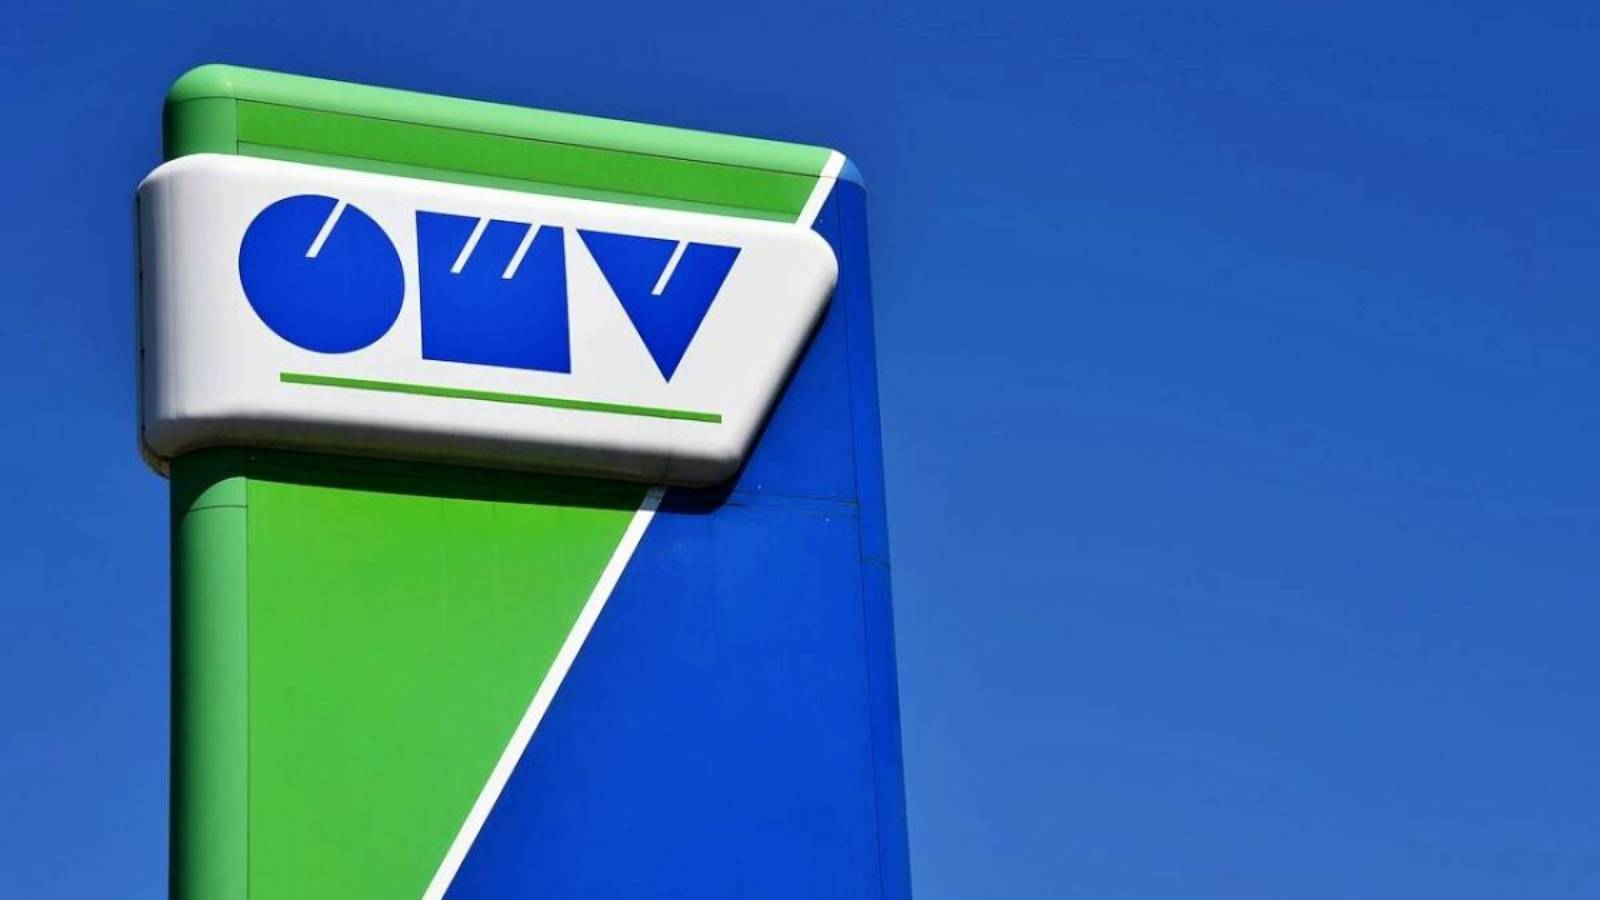 OMV 2 Distributori di benzina ufficiali GRATUITI MILIONI di rumeni